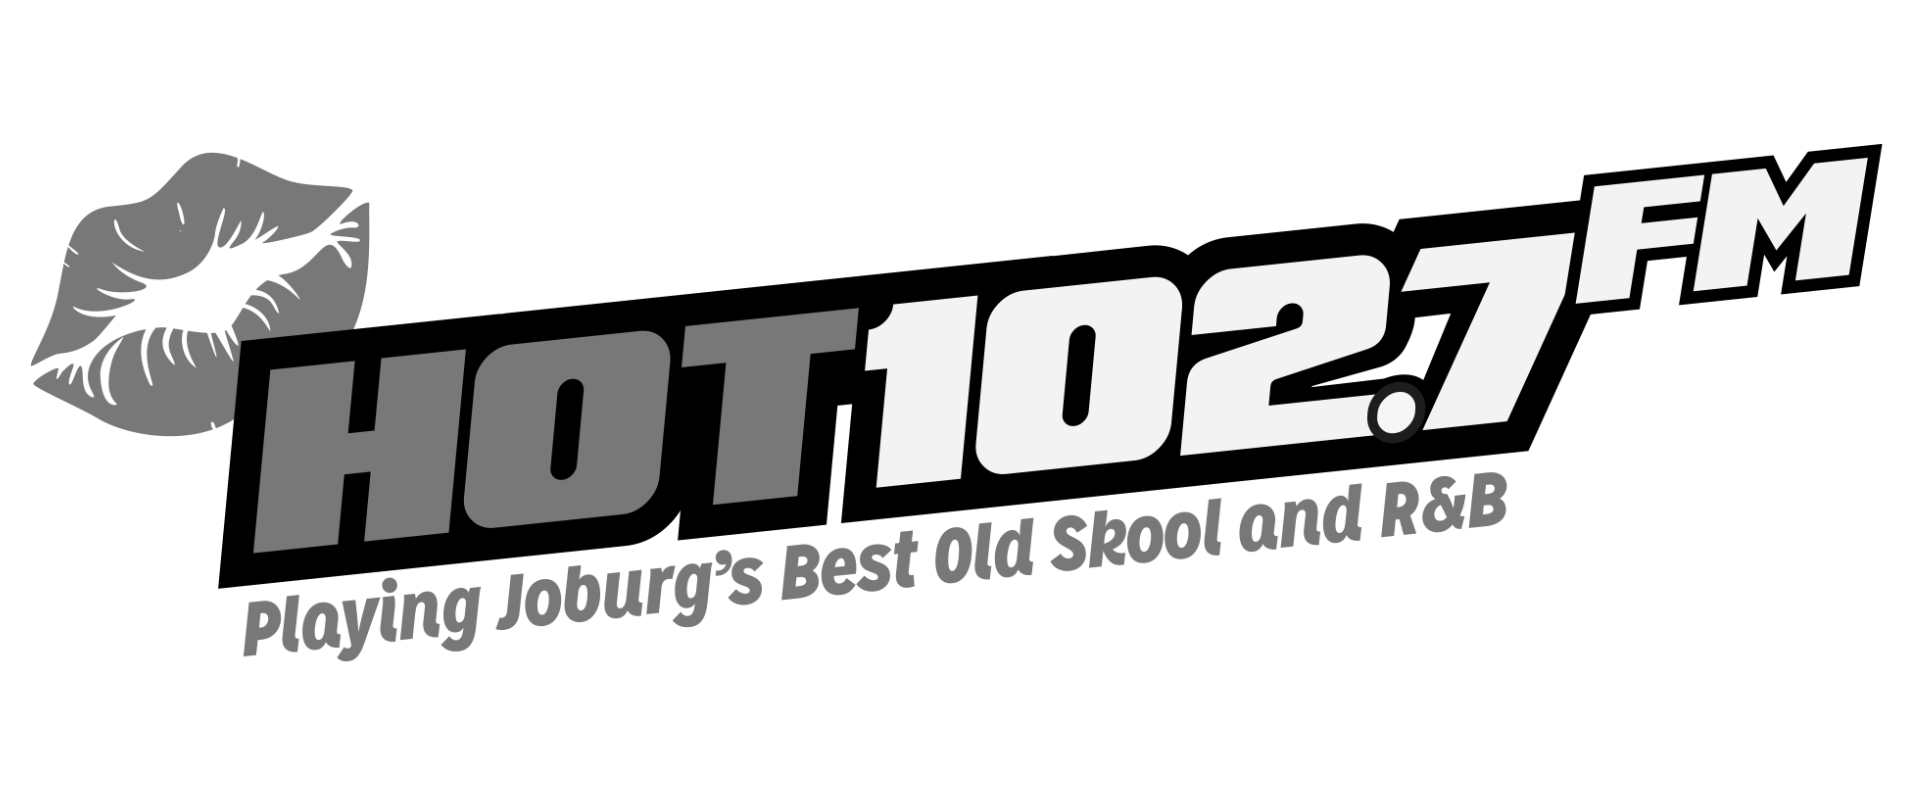 Hot 102.7 FM Logo